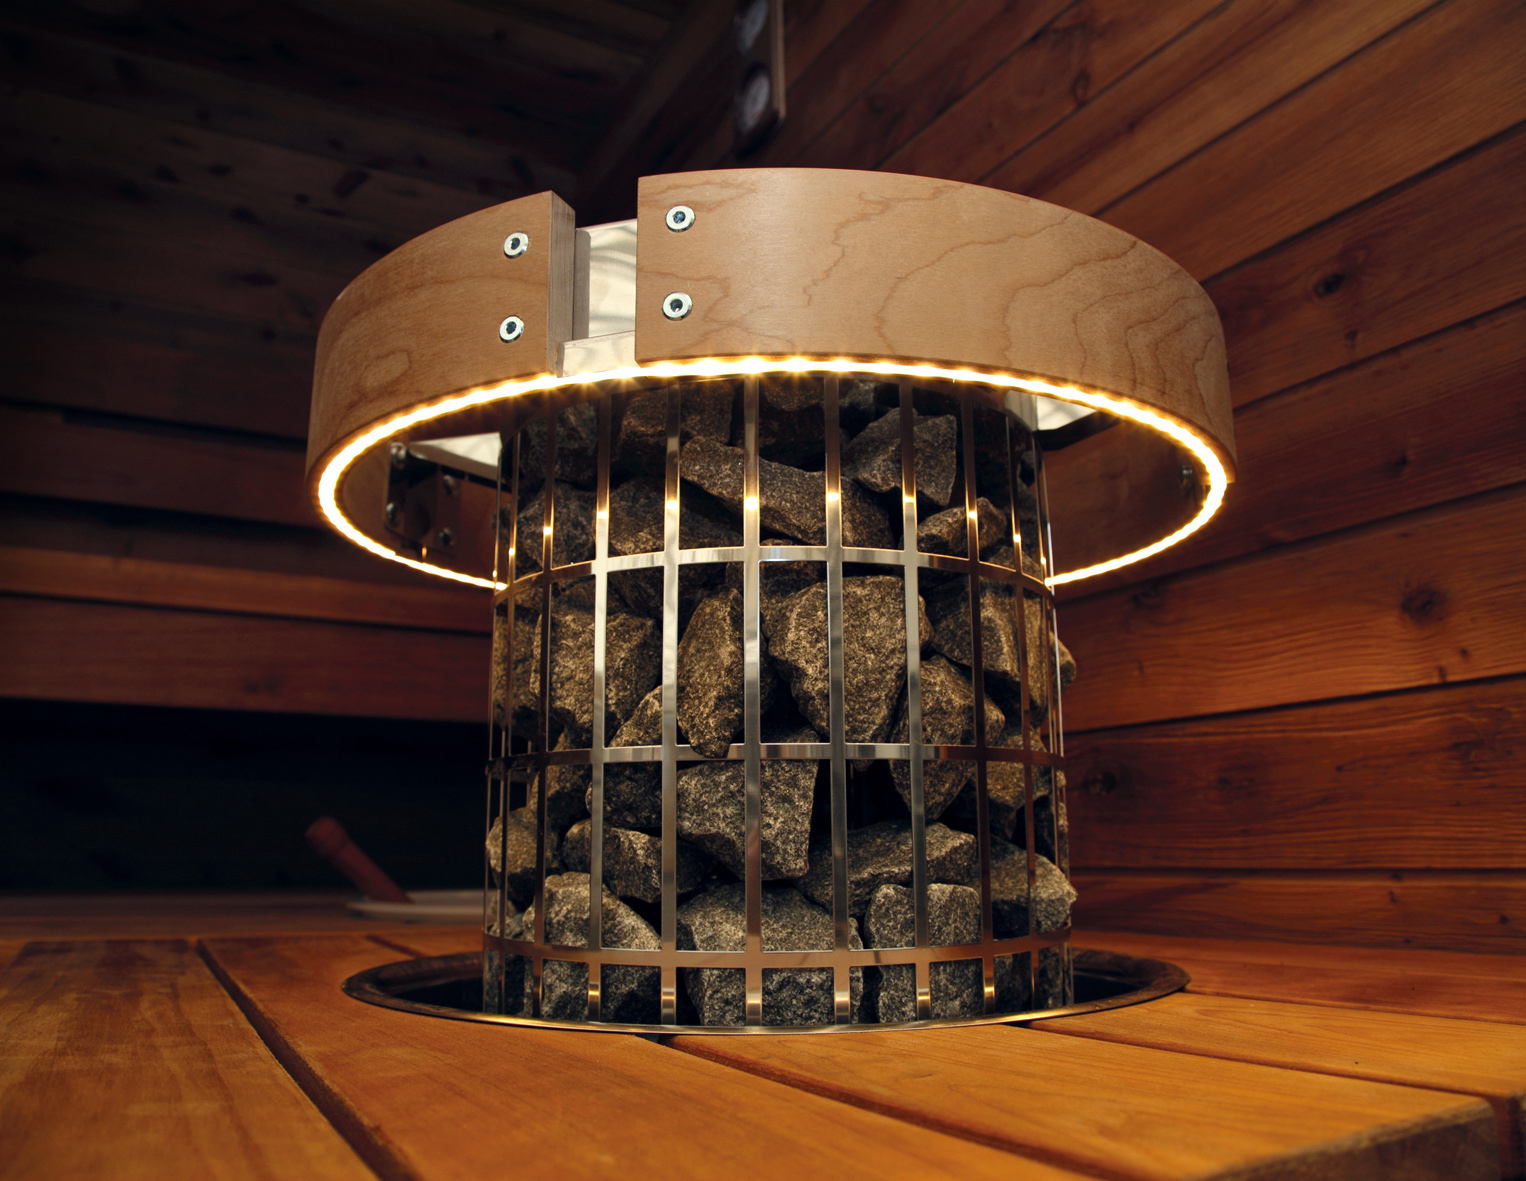 Harvia Cilindro Half Series Electric Sauna Heater 6/8/9/10.5kW